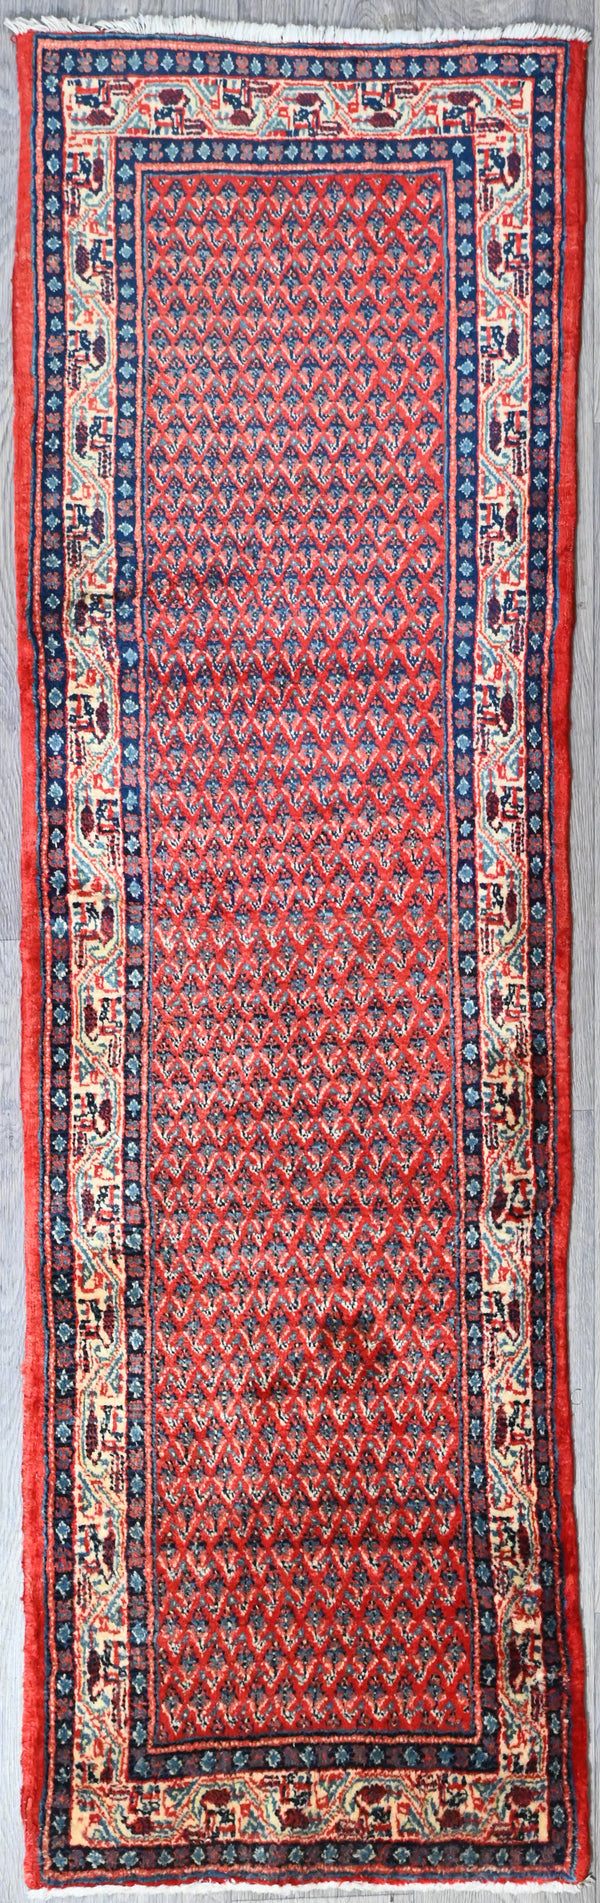 Handknotted Wool Persian Hamadan Runner - (205 cm x 60 cm)